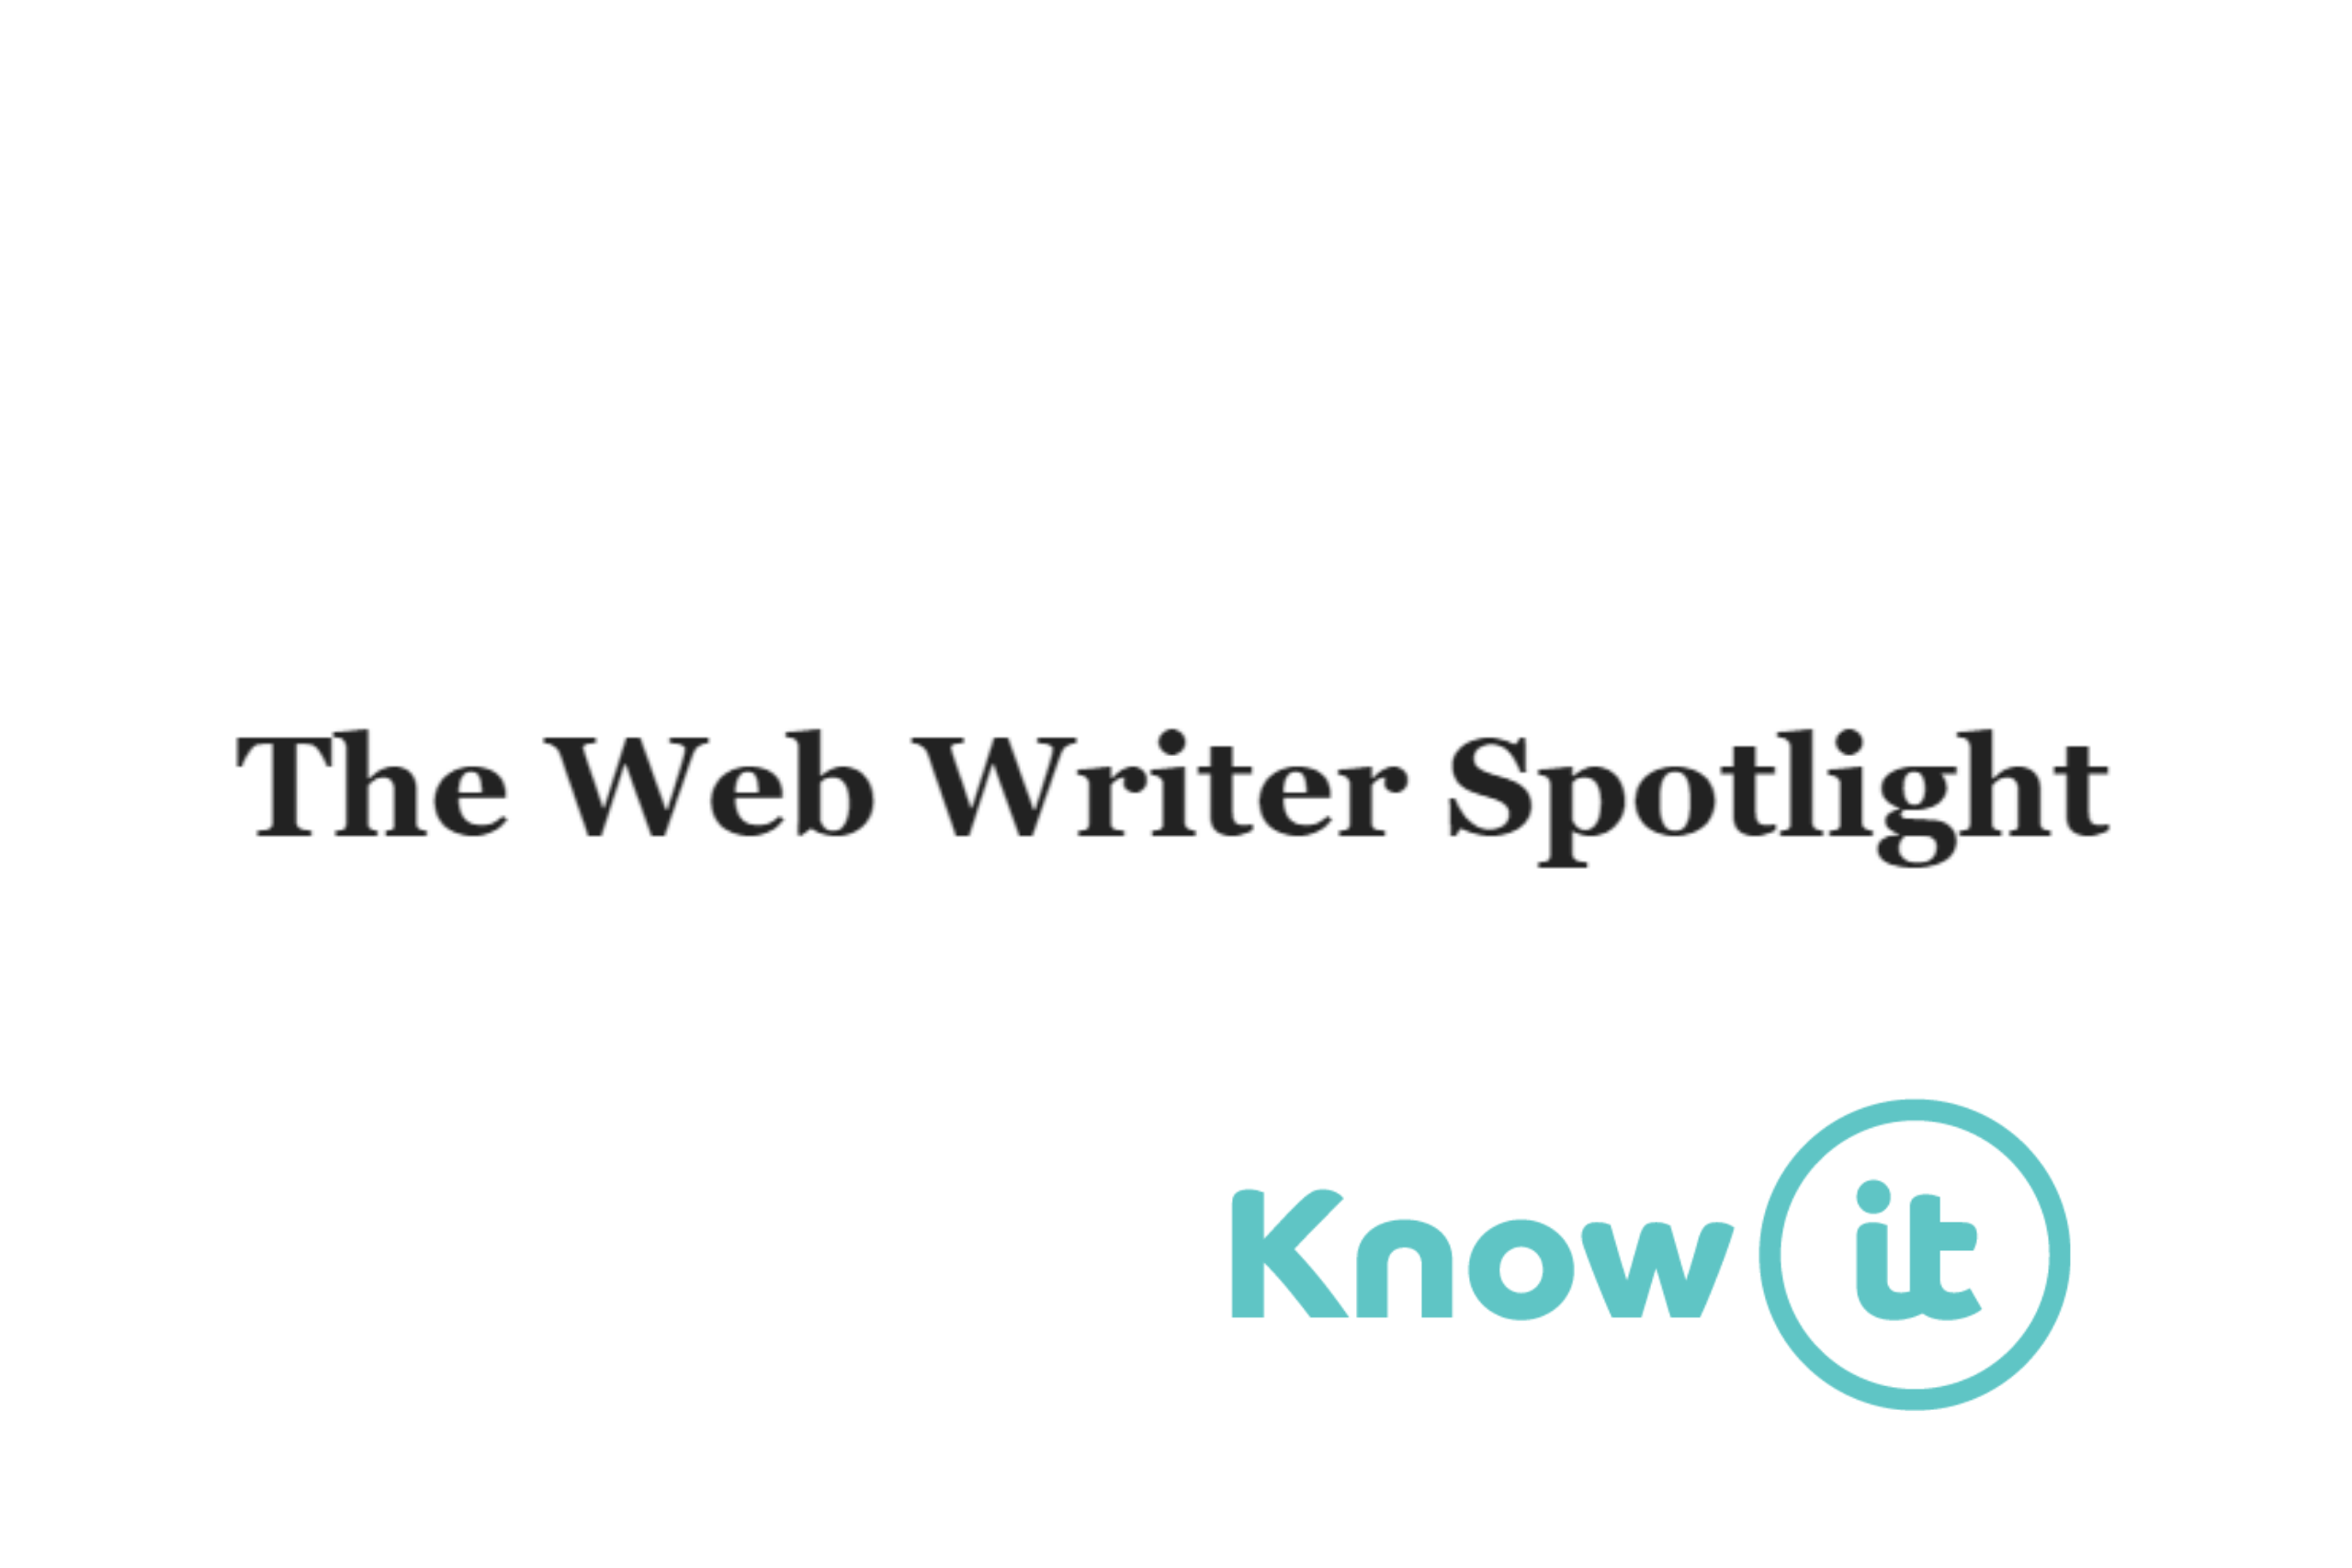 Know-it logo with The Web Writer Spotlight logo